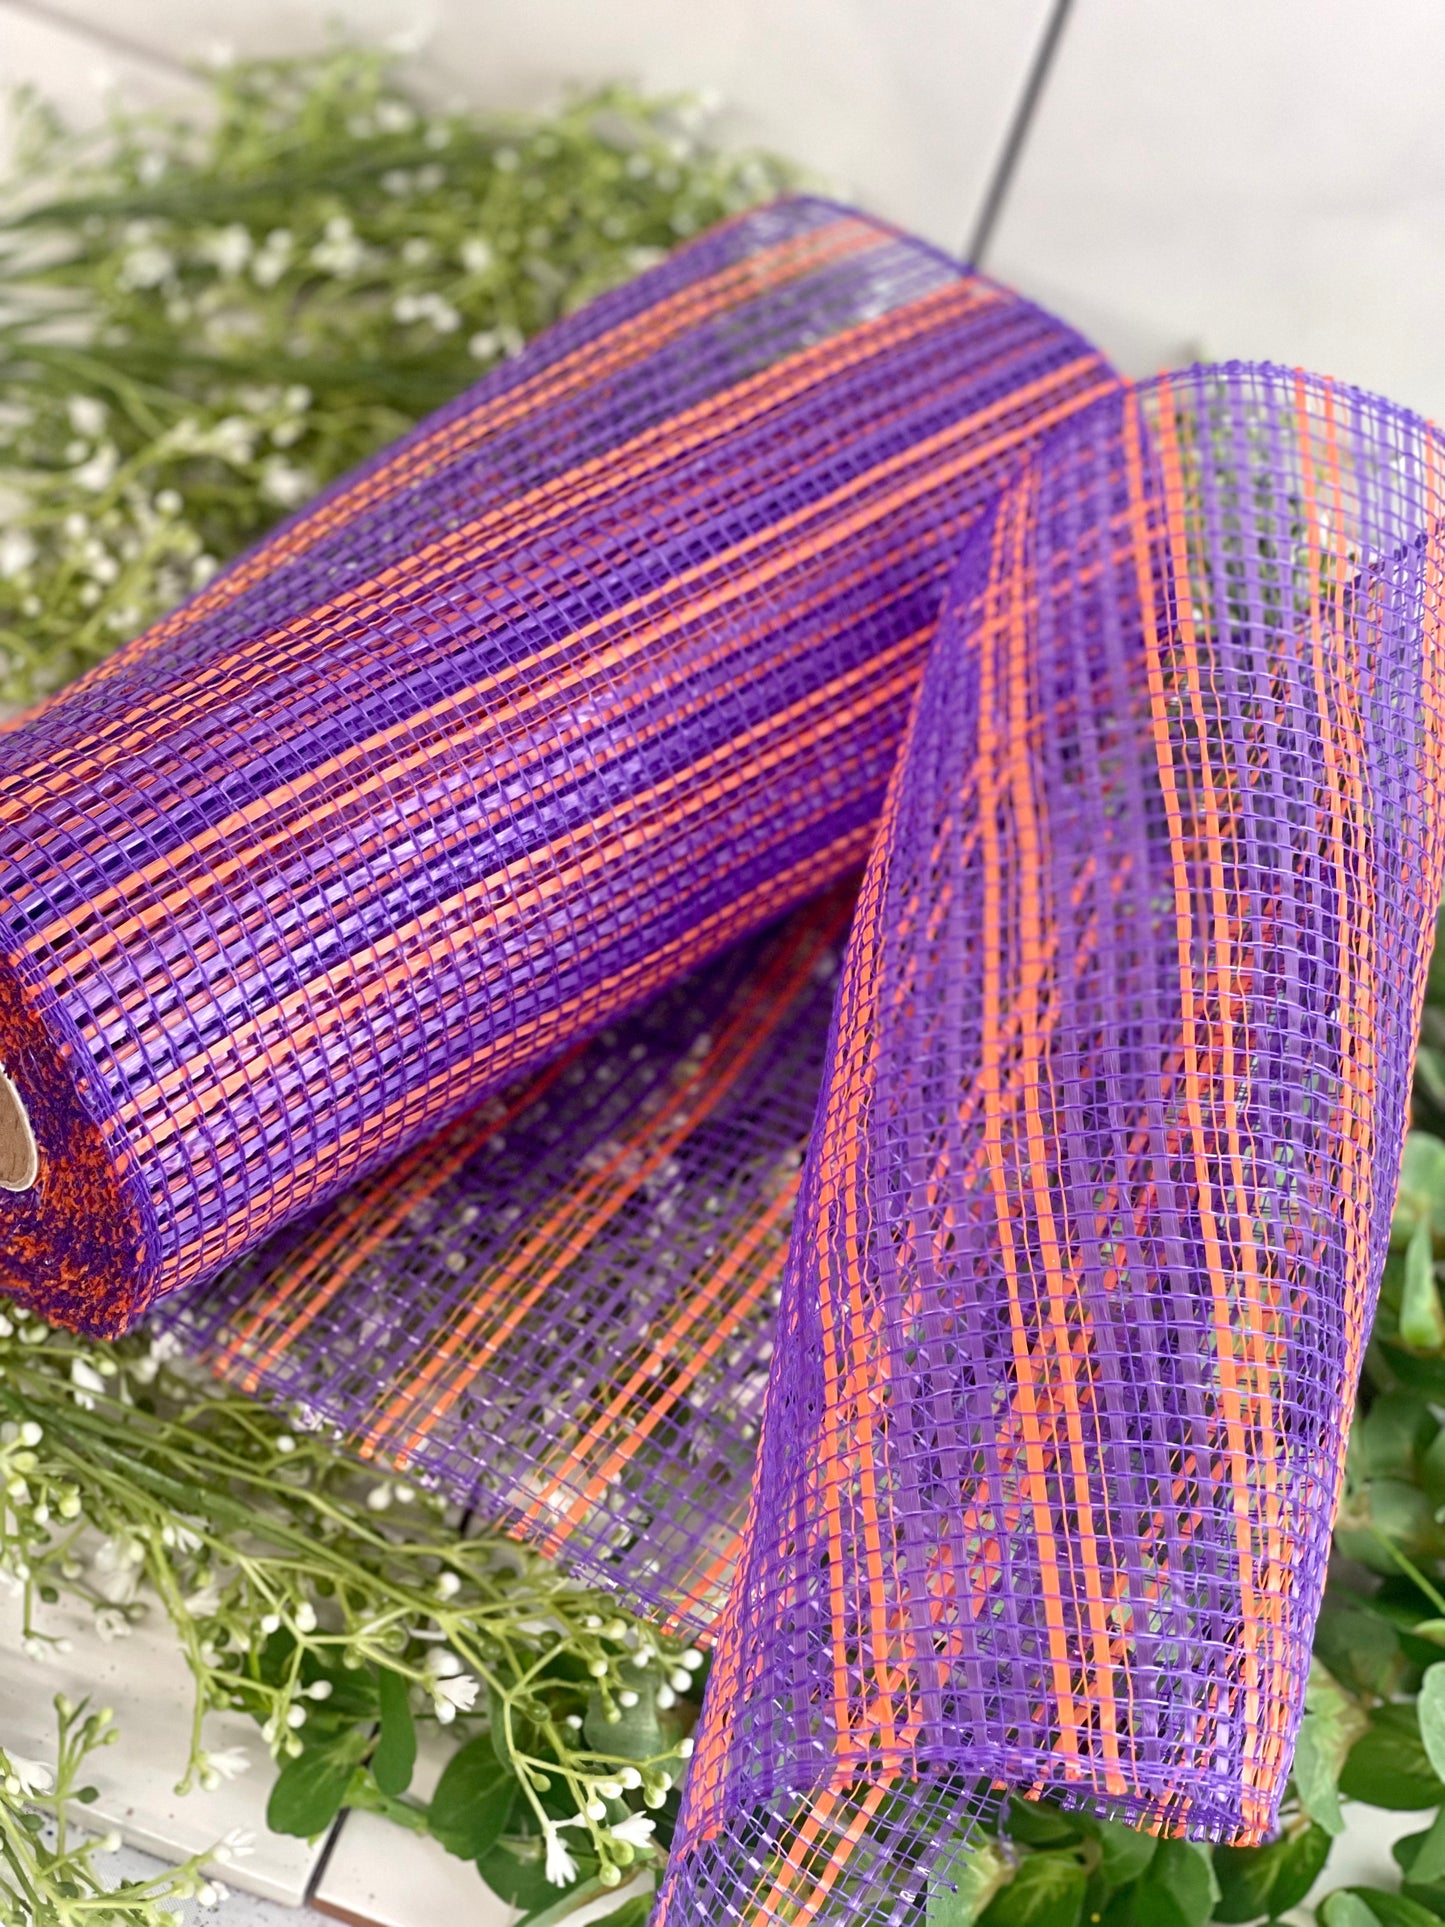 10 Inch By 10 Yard Orange And Purple Horizontal Wide Stripe Netting